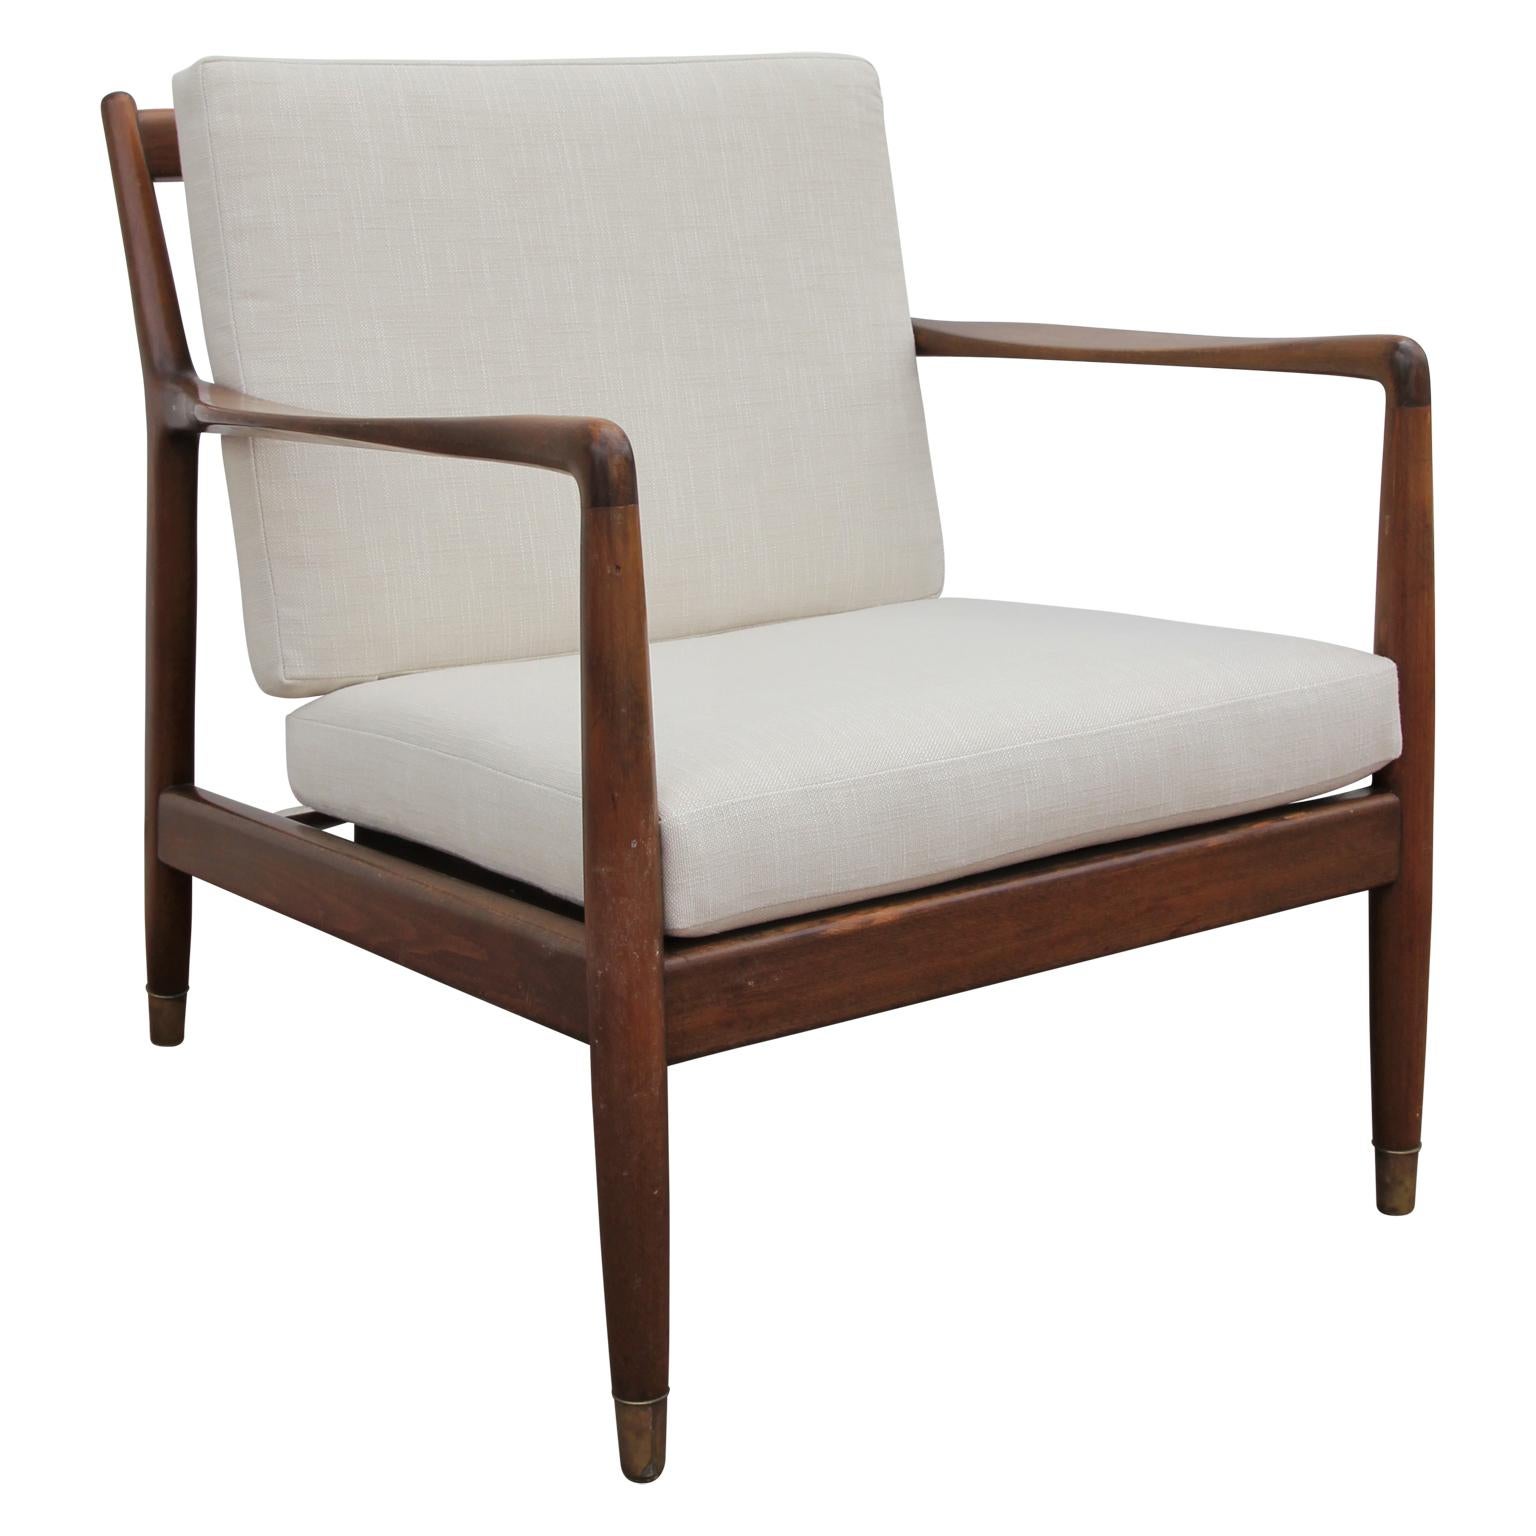 Mid-20th Century Folke Ohlsson Model 75-C Walnut Color Danish Modern Lounge Chair for DUX